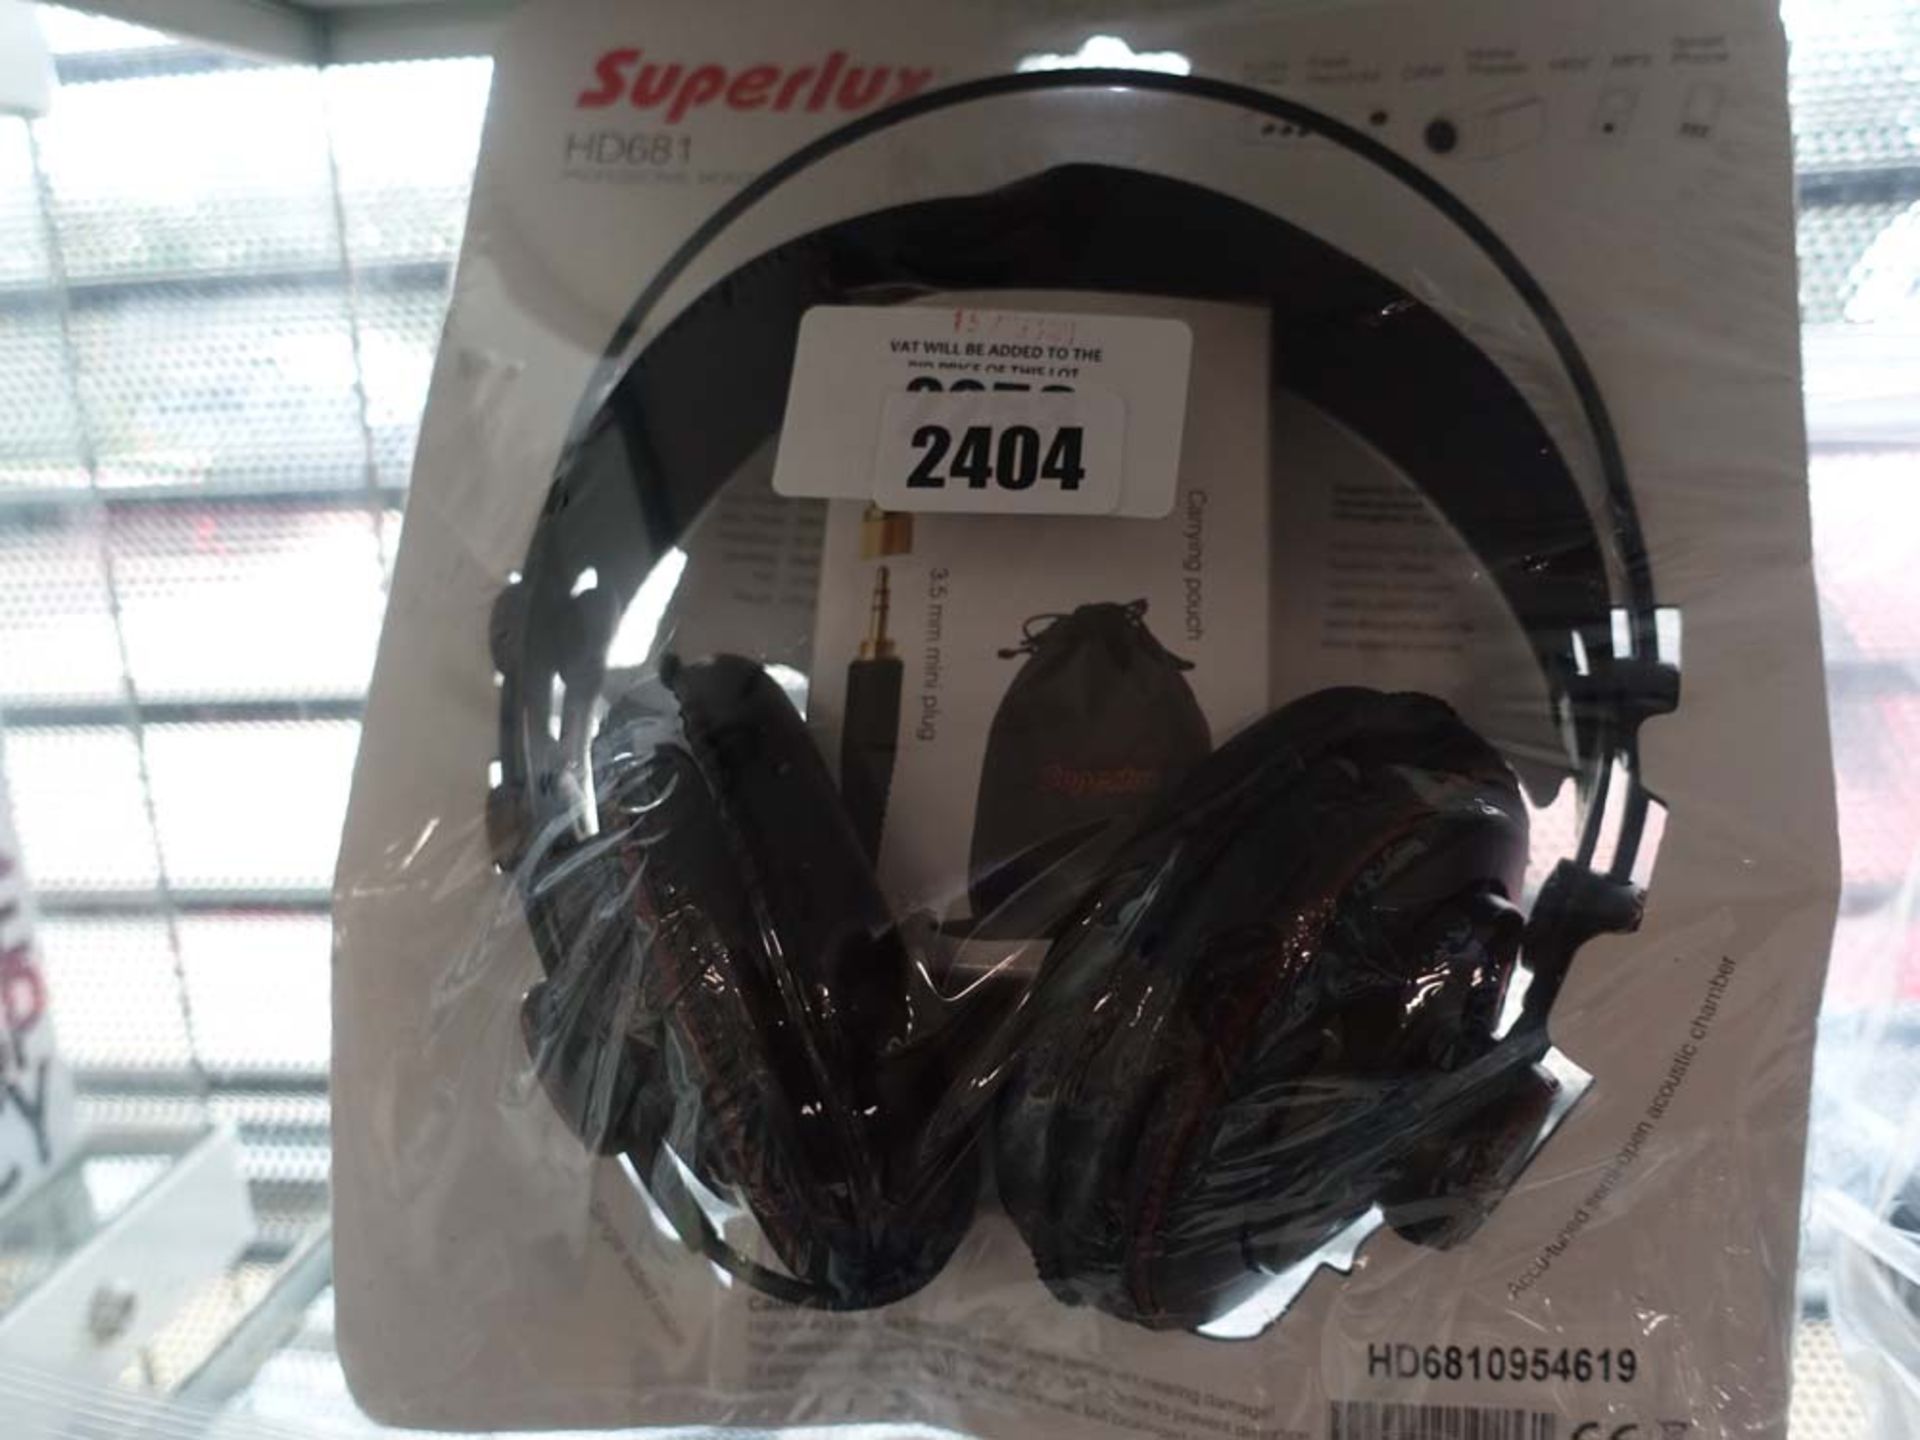 (2033) 2253 - Pair of Superlux HD 681 headphones in blister pack